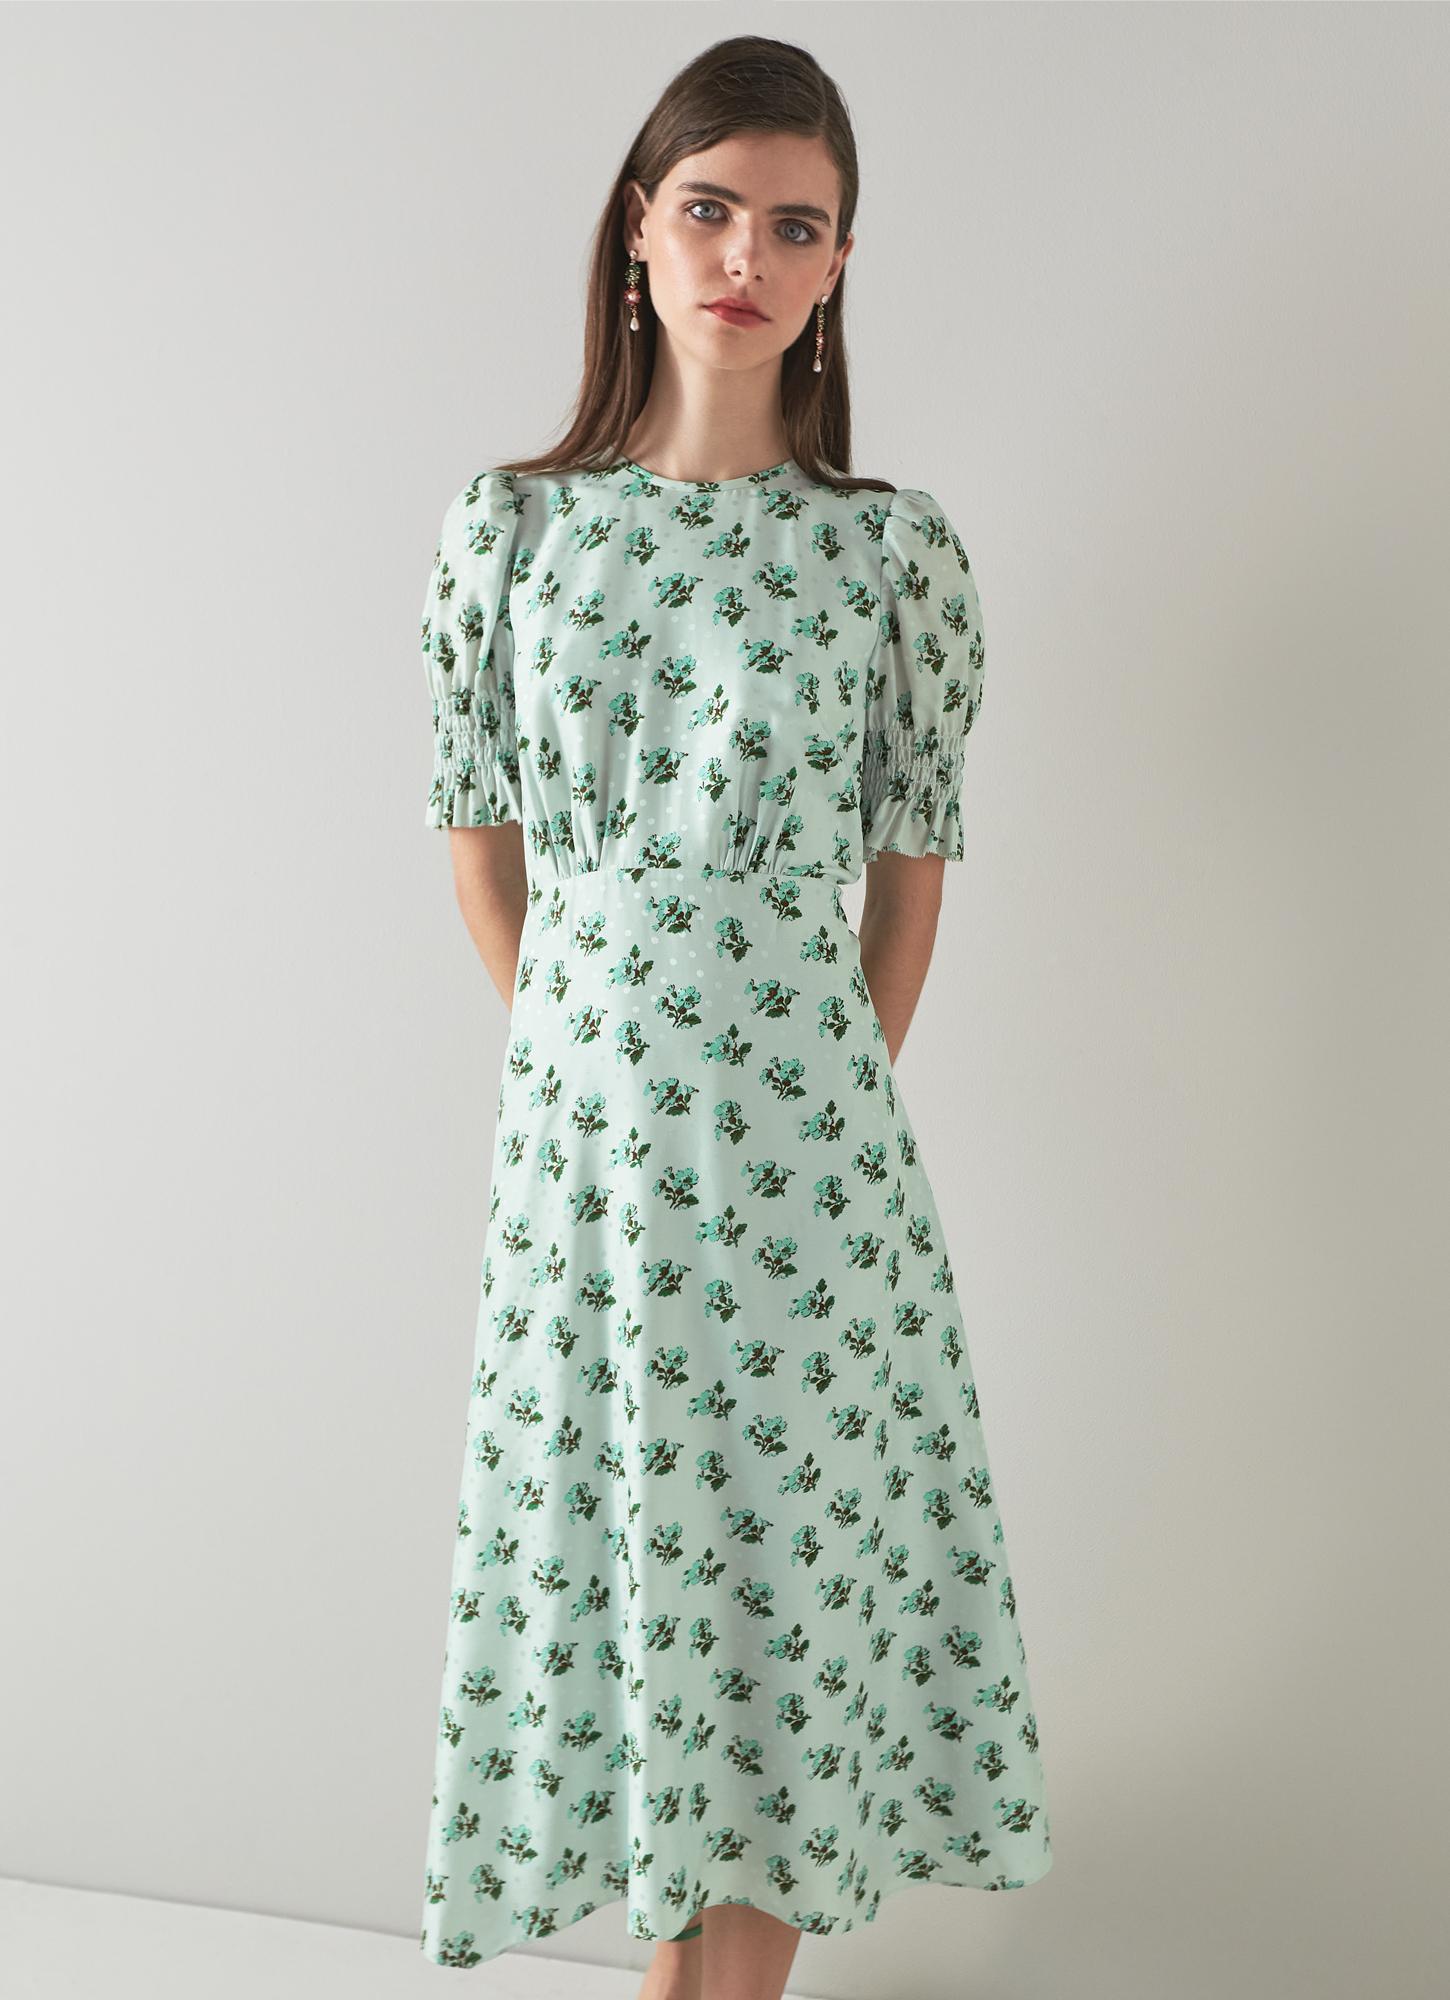 L.K.Bennett Tabitha Green Silk-Blend Spot Jacquard Primula Print Dress Morning Mist Multi, Morning Mist Multi